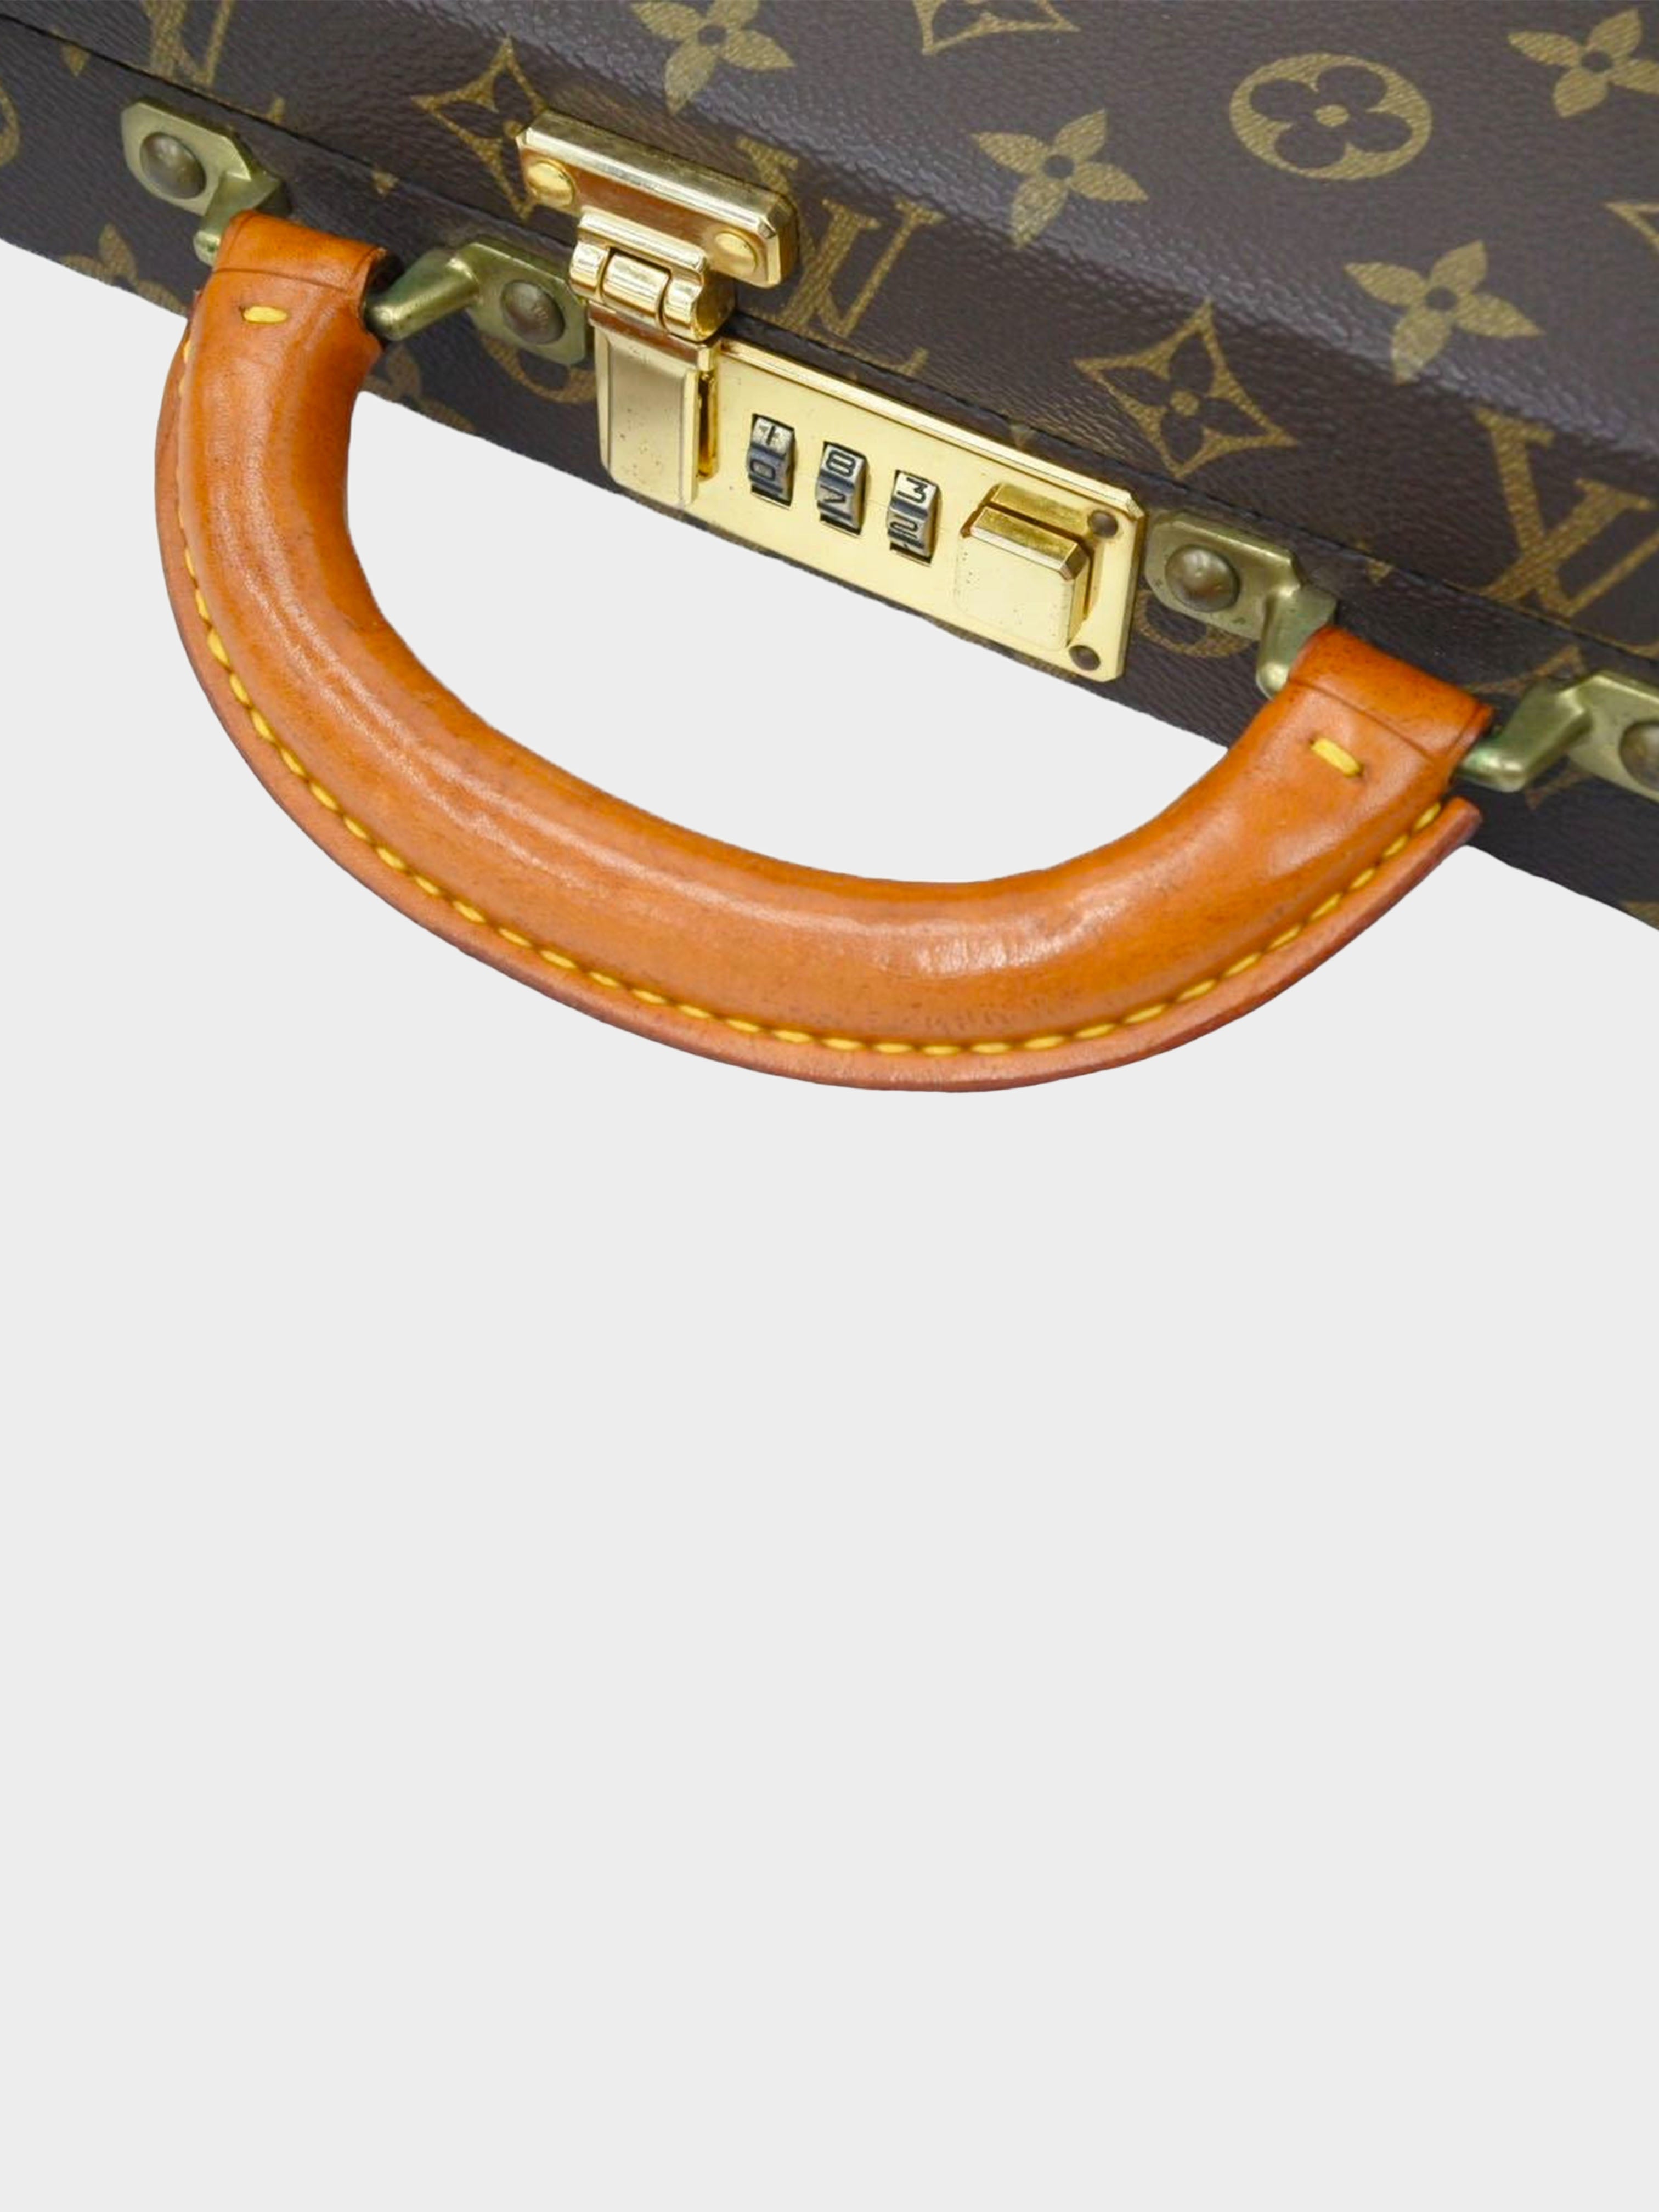 Louis Vuitton Epi Leather Black Briefcase Fermoir